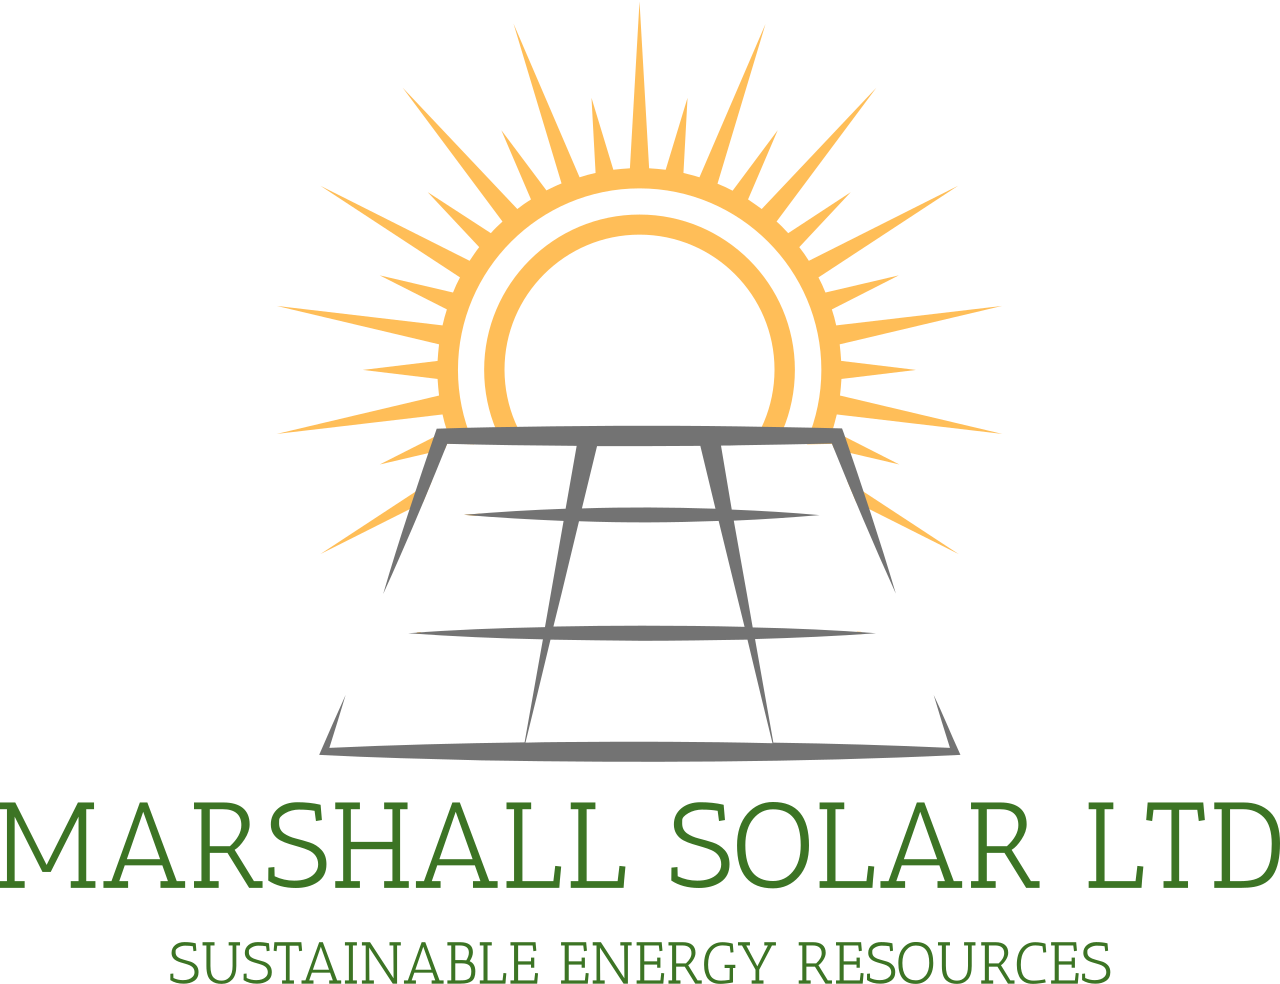 Marshall Solar Ltd's logo